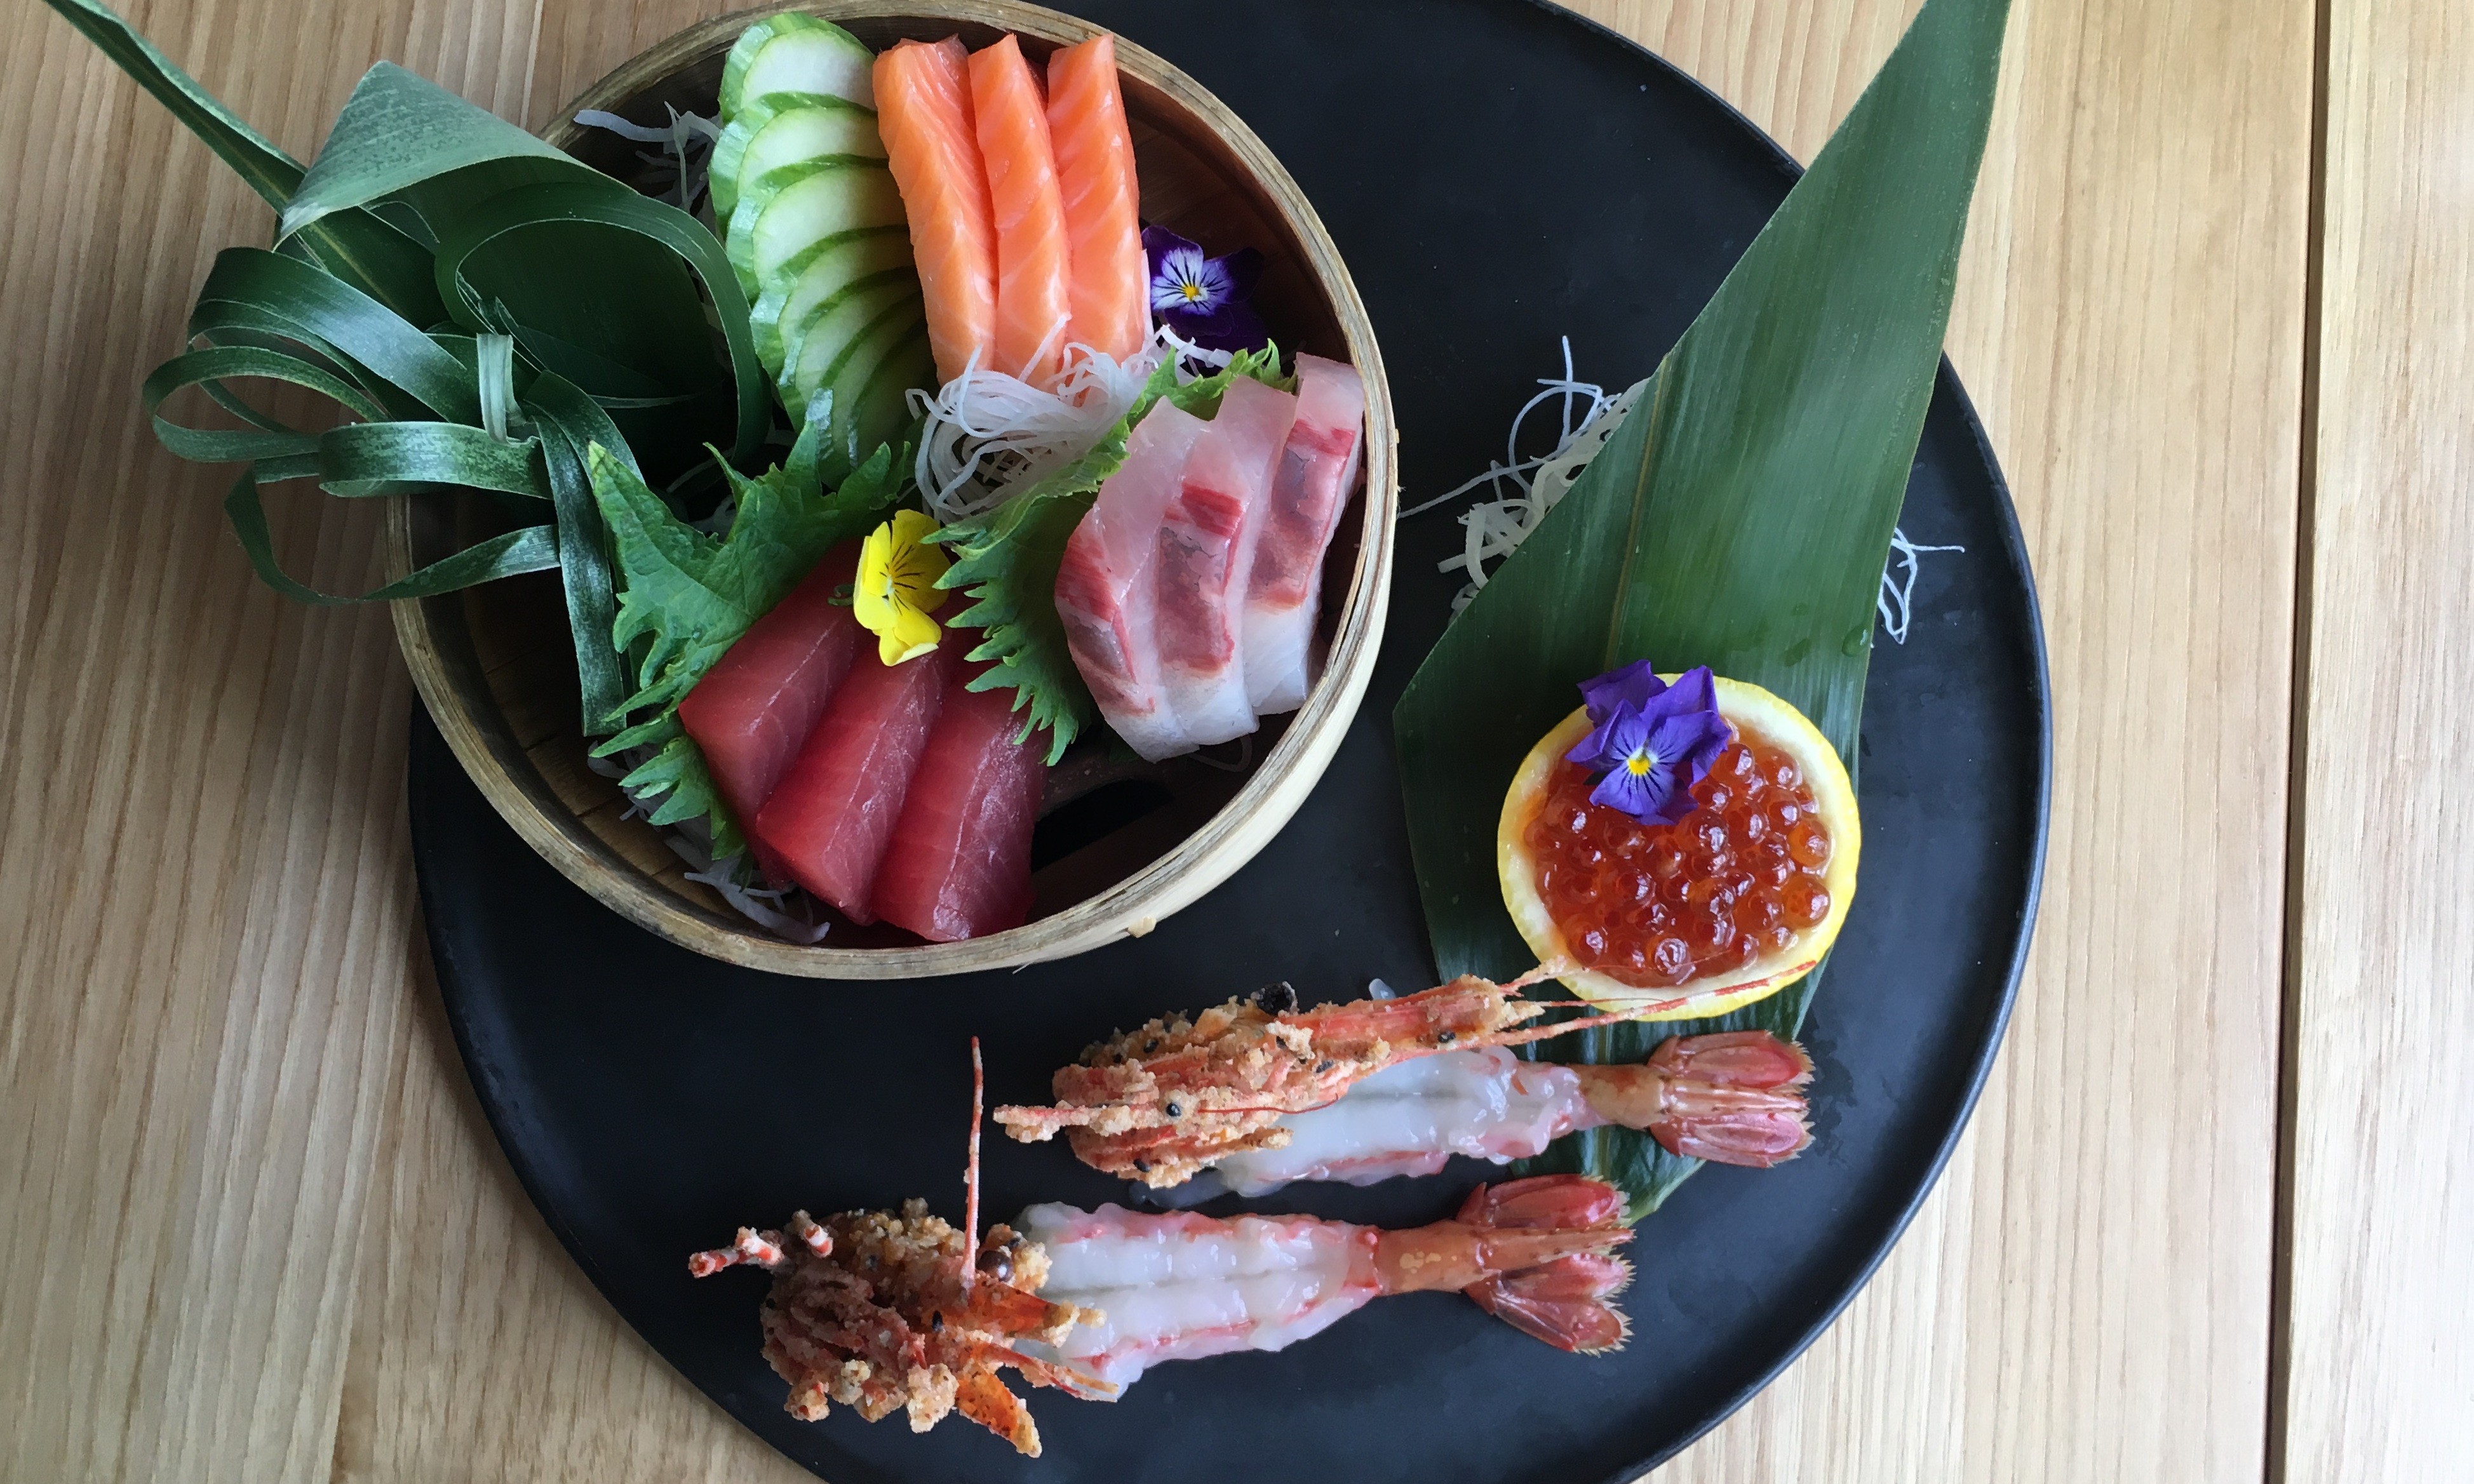 https://media2.westword.com/den/imager/u/original/11399871/bamboo-sushi-sashimi-set.jpg